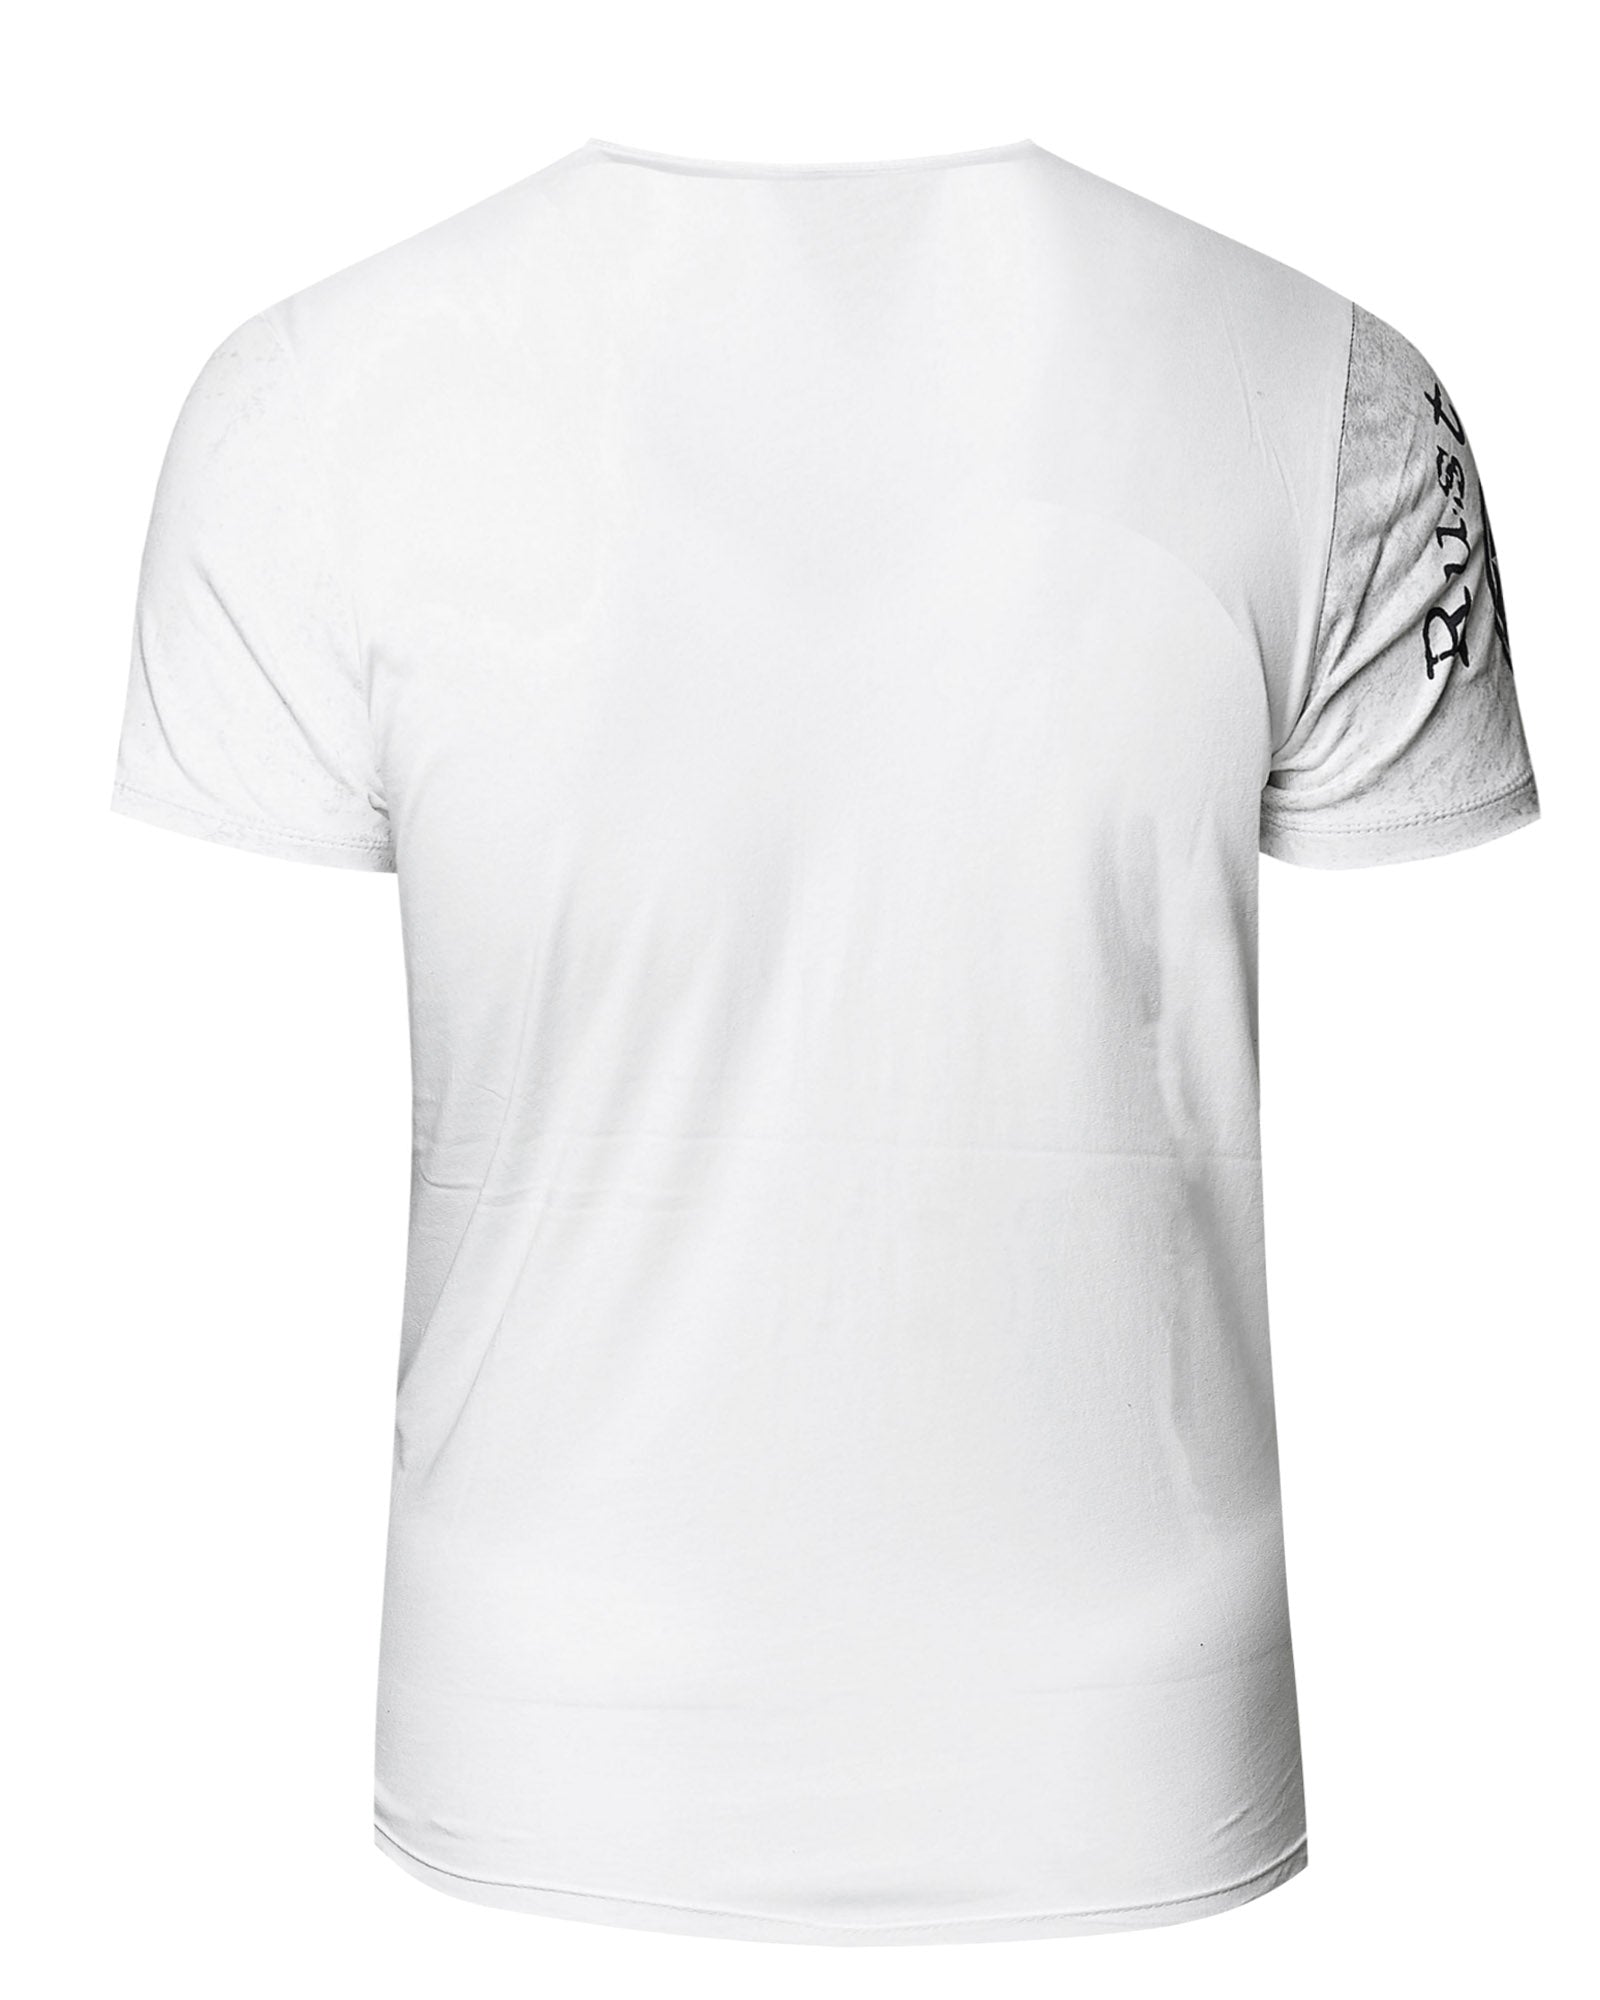 Parts t-shirt - White